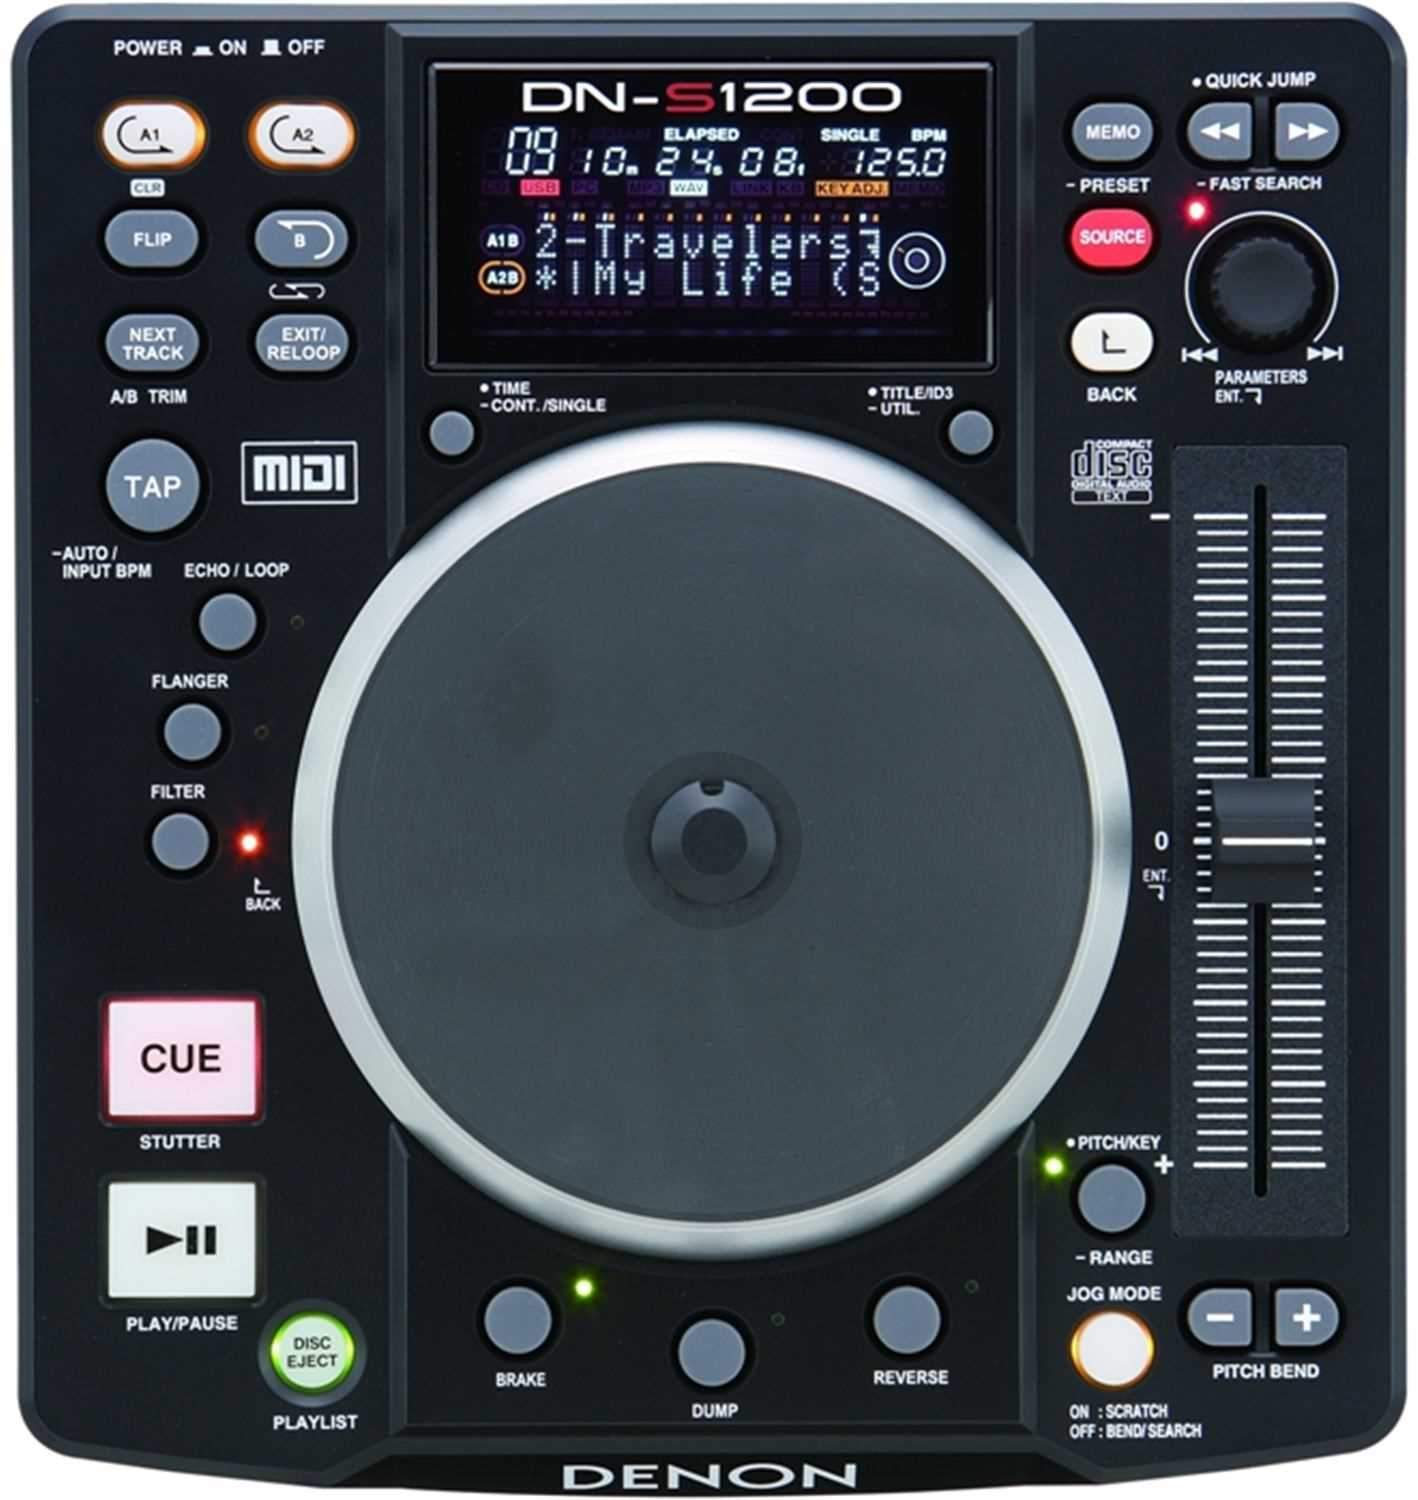 Denon DJ DN-S1200 CD/USB Media Player u0026 Controller | Solotech